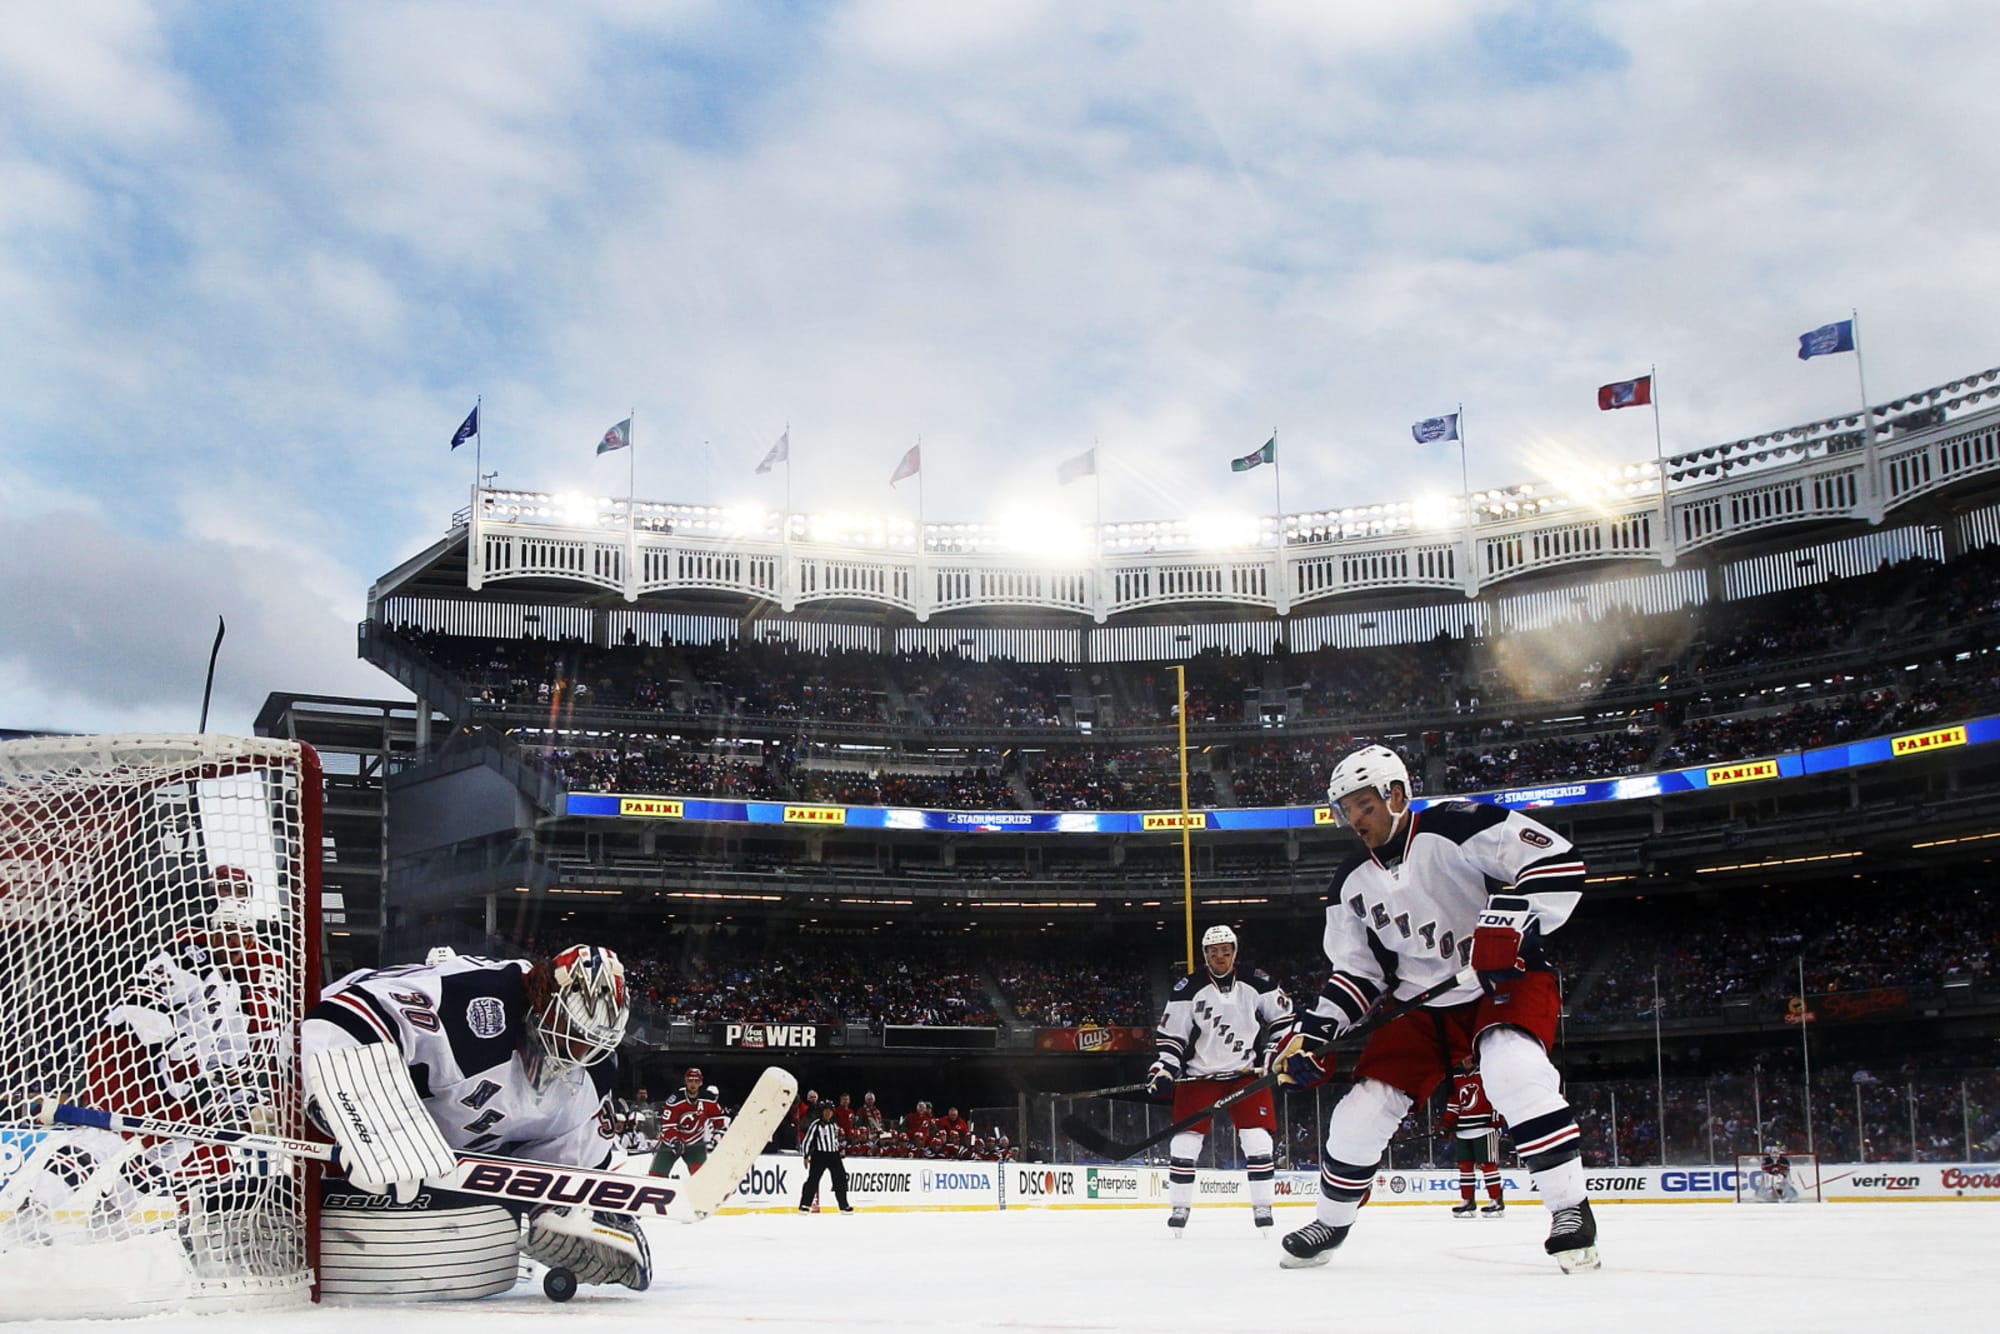 NHL Stadium Series Jan.26/2014 New York Rangers - New Jersey Devils 